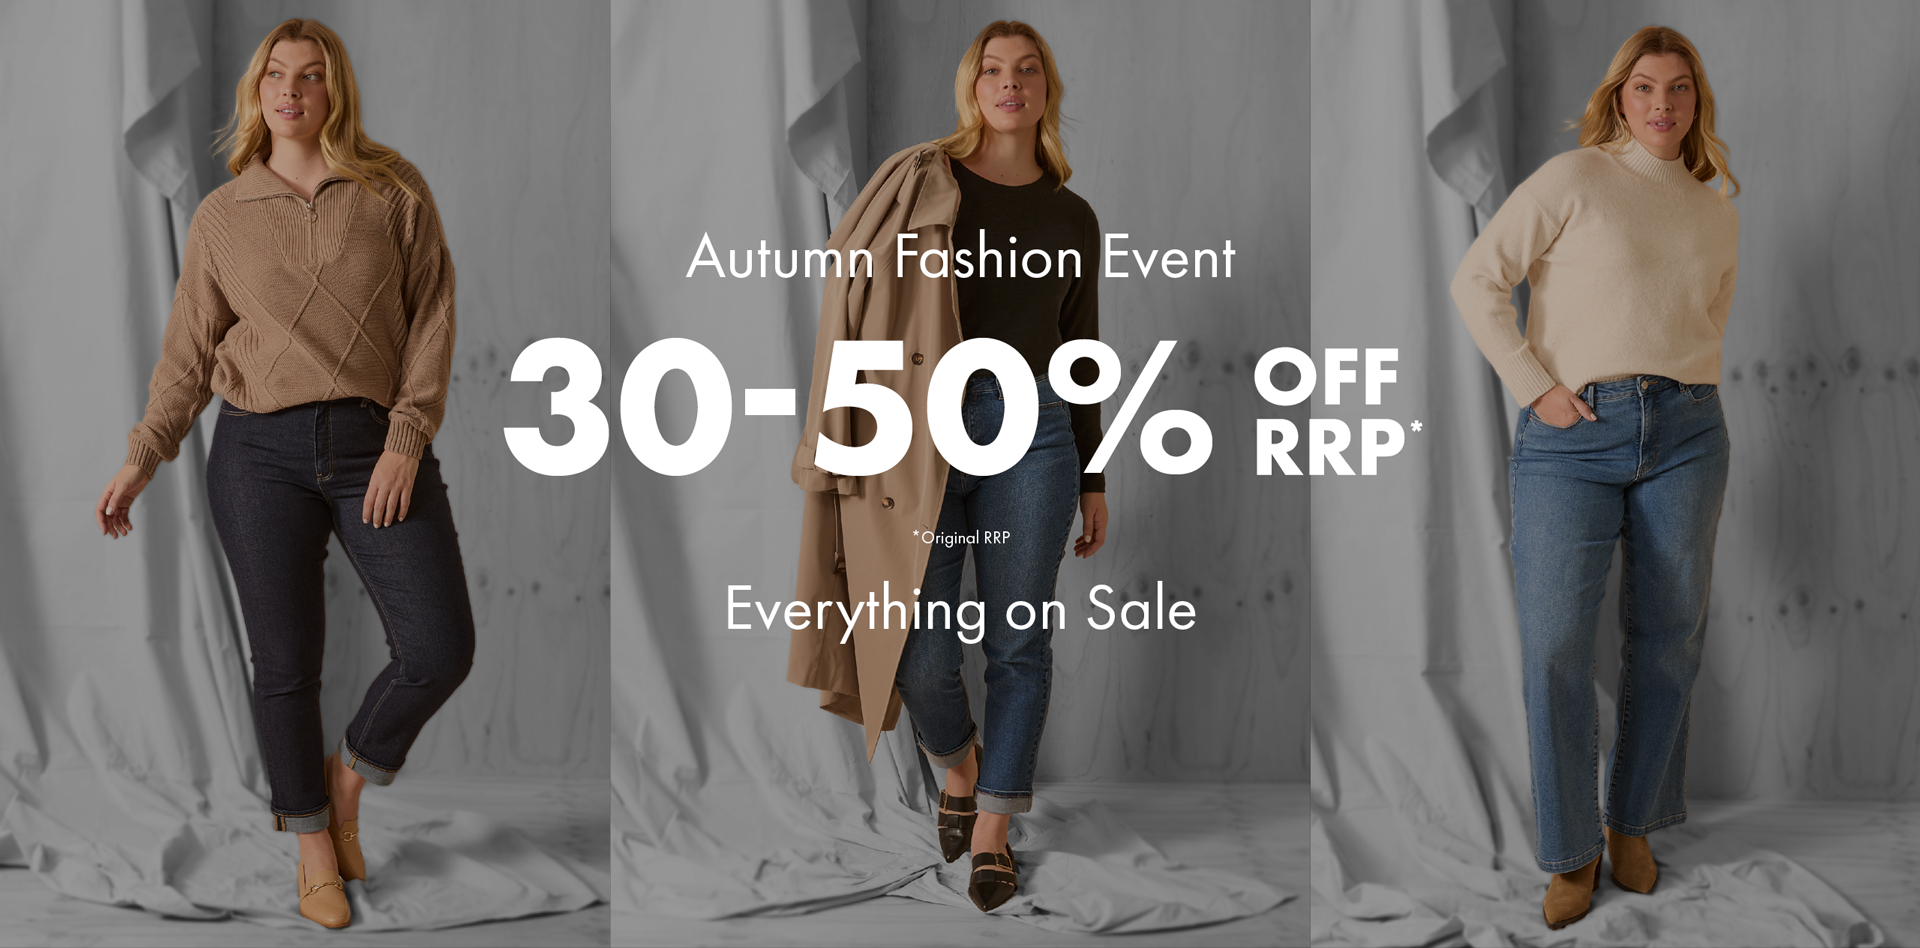 Autumn Fashion Event - 30% - 50% off RRP